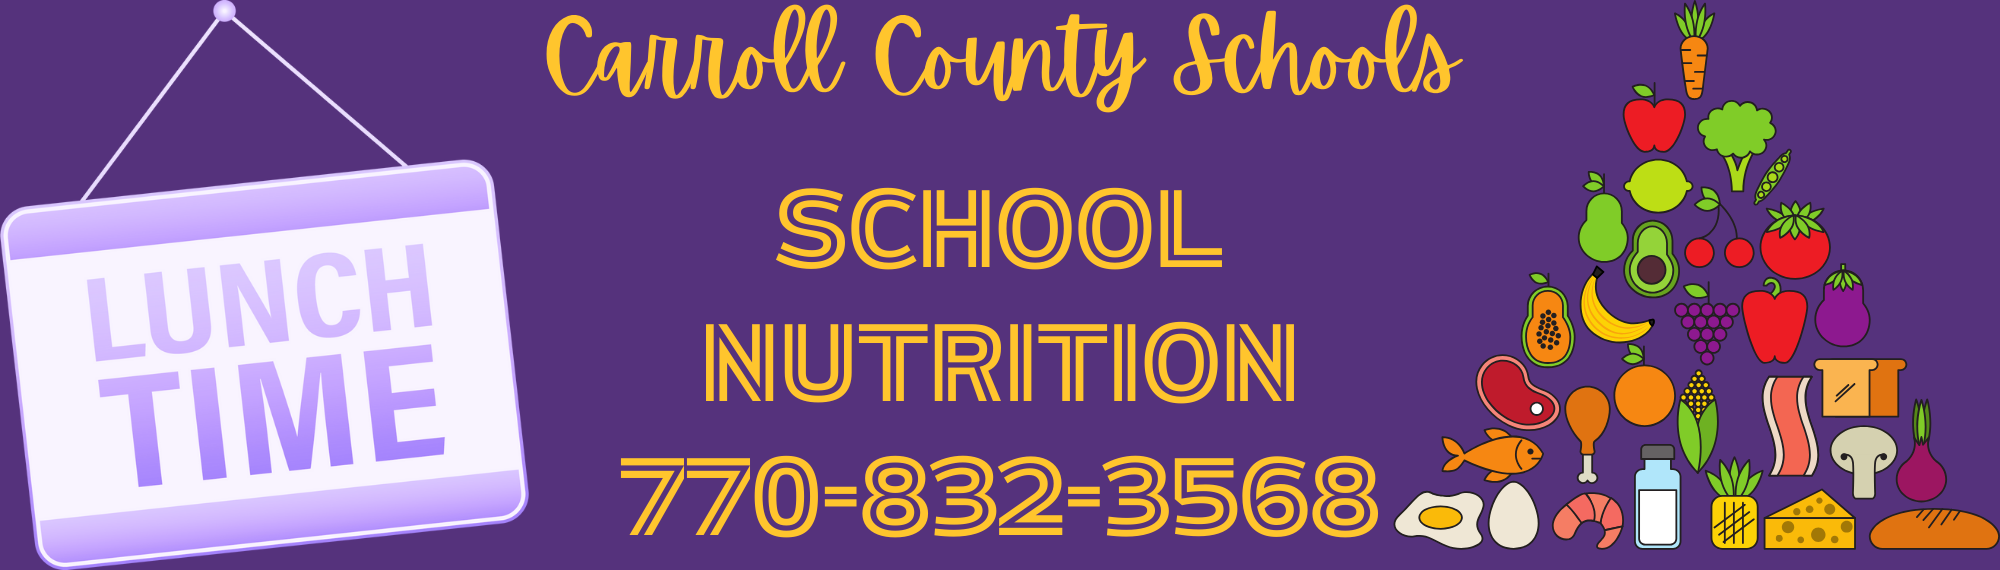 Carroll County Schools Nutrition Page